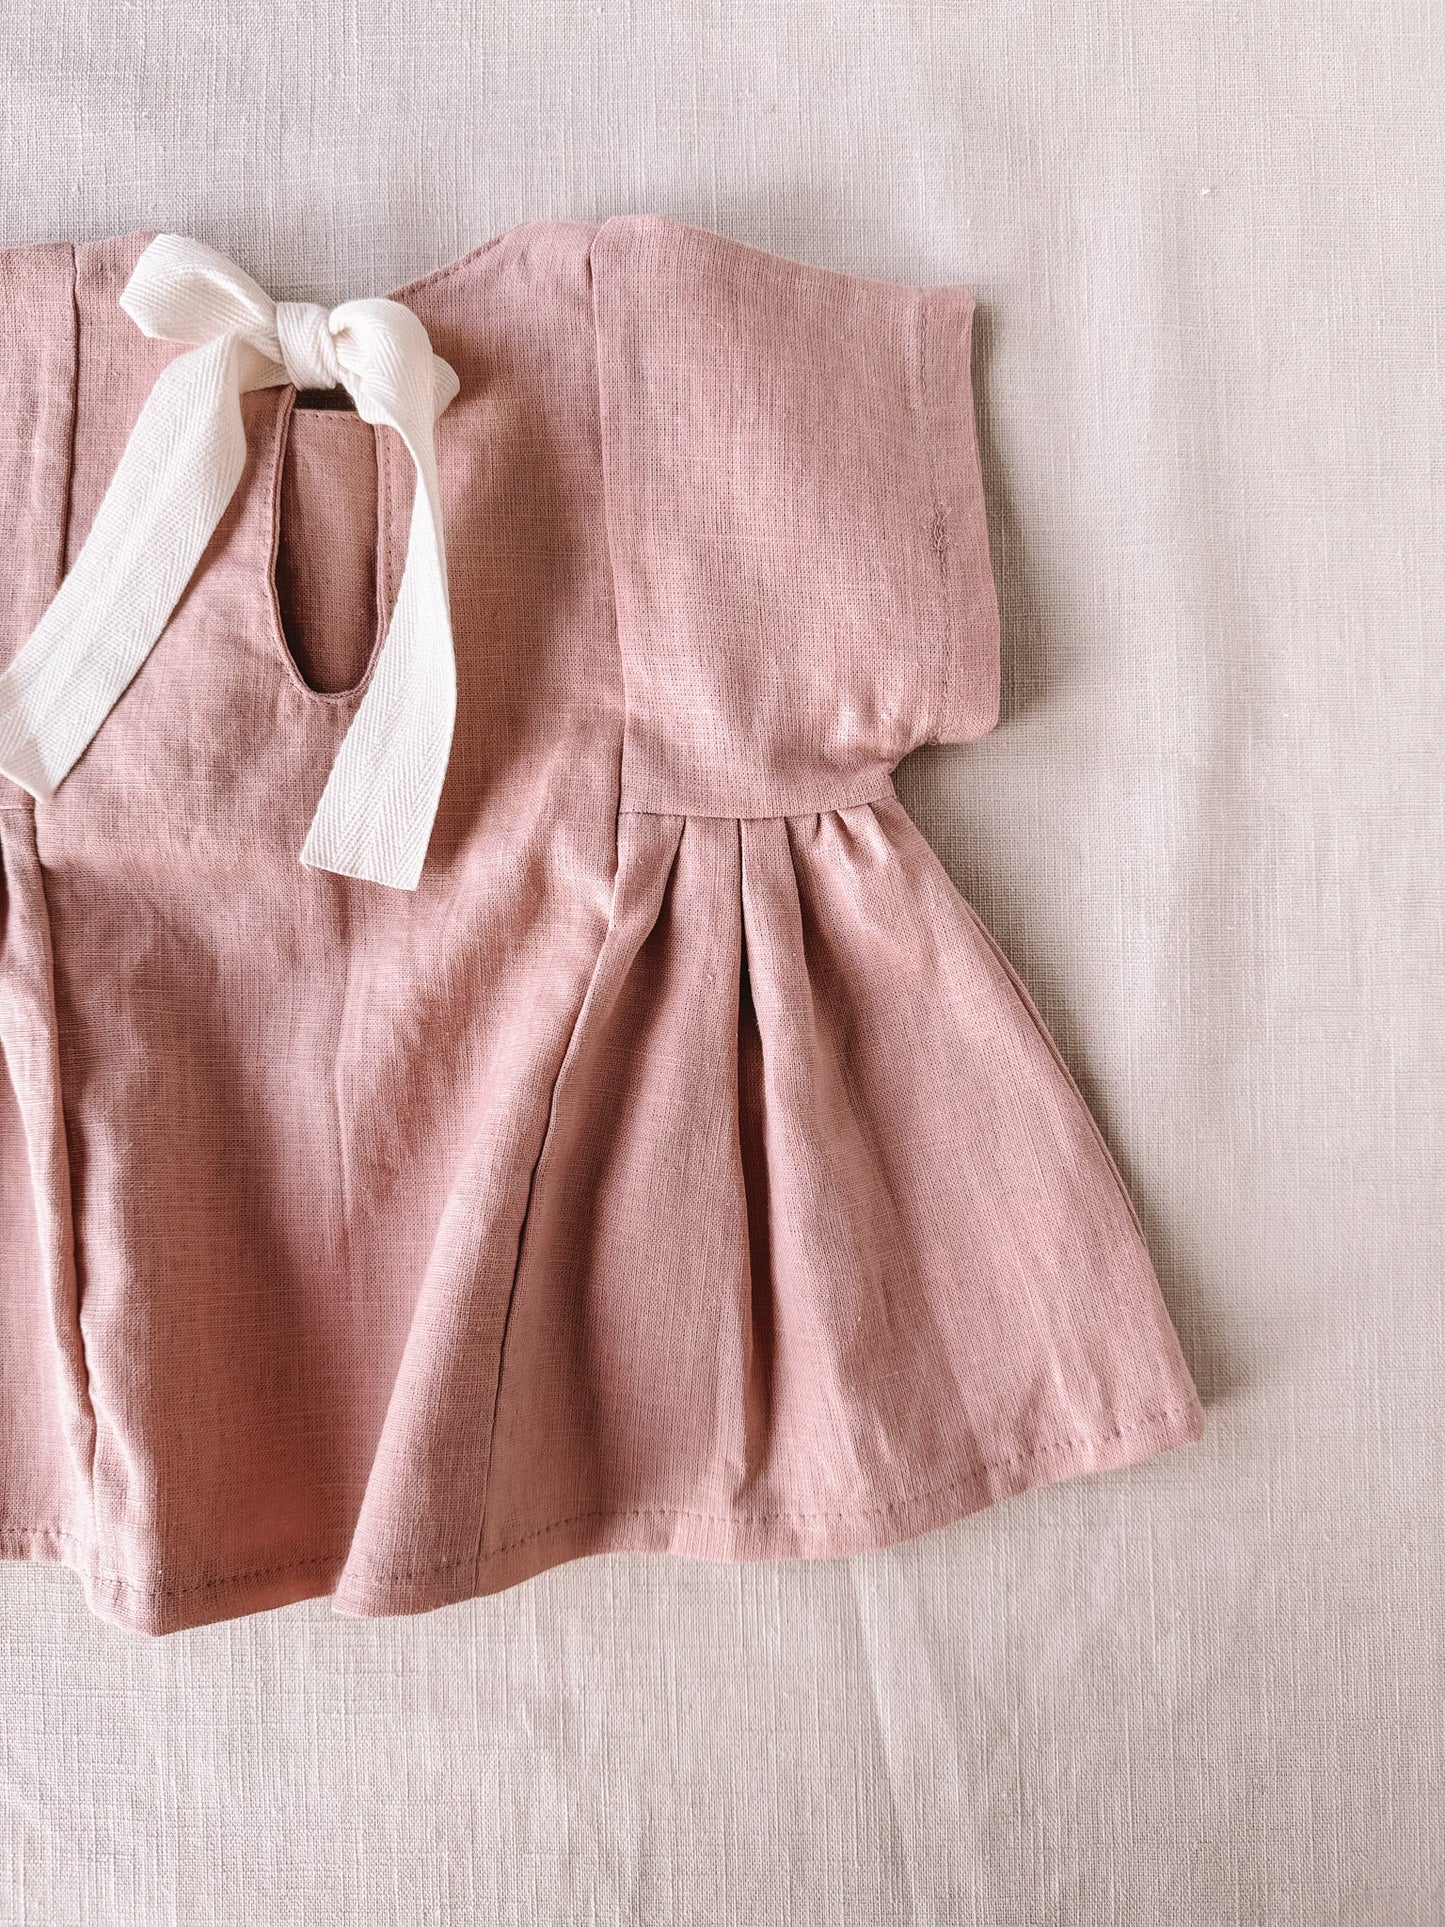 Malia baby dress / linen - vintage rose